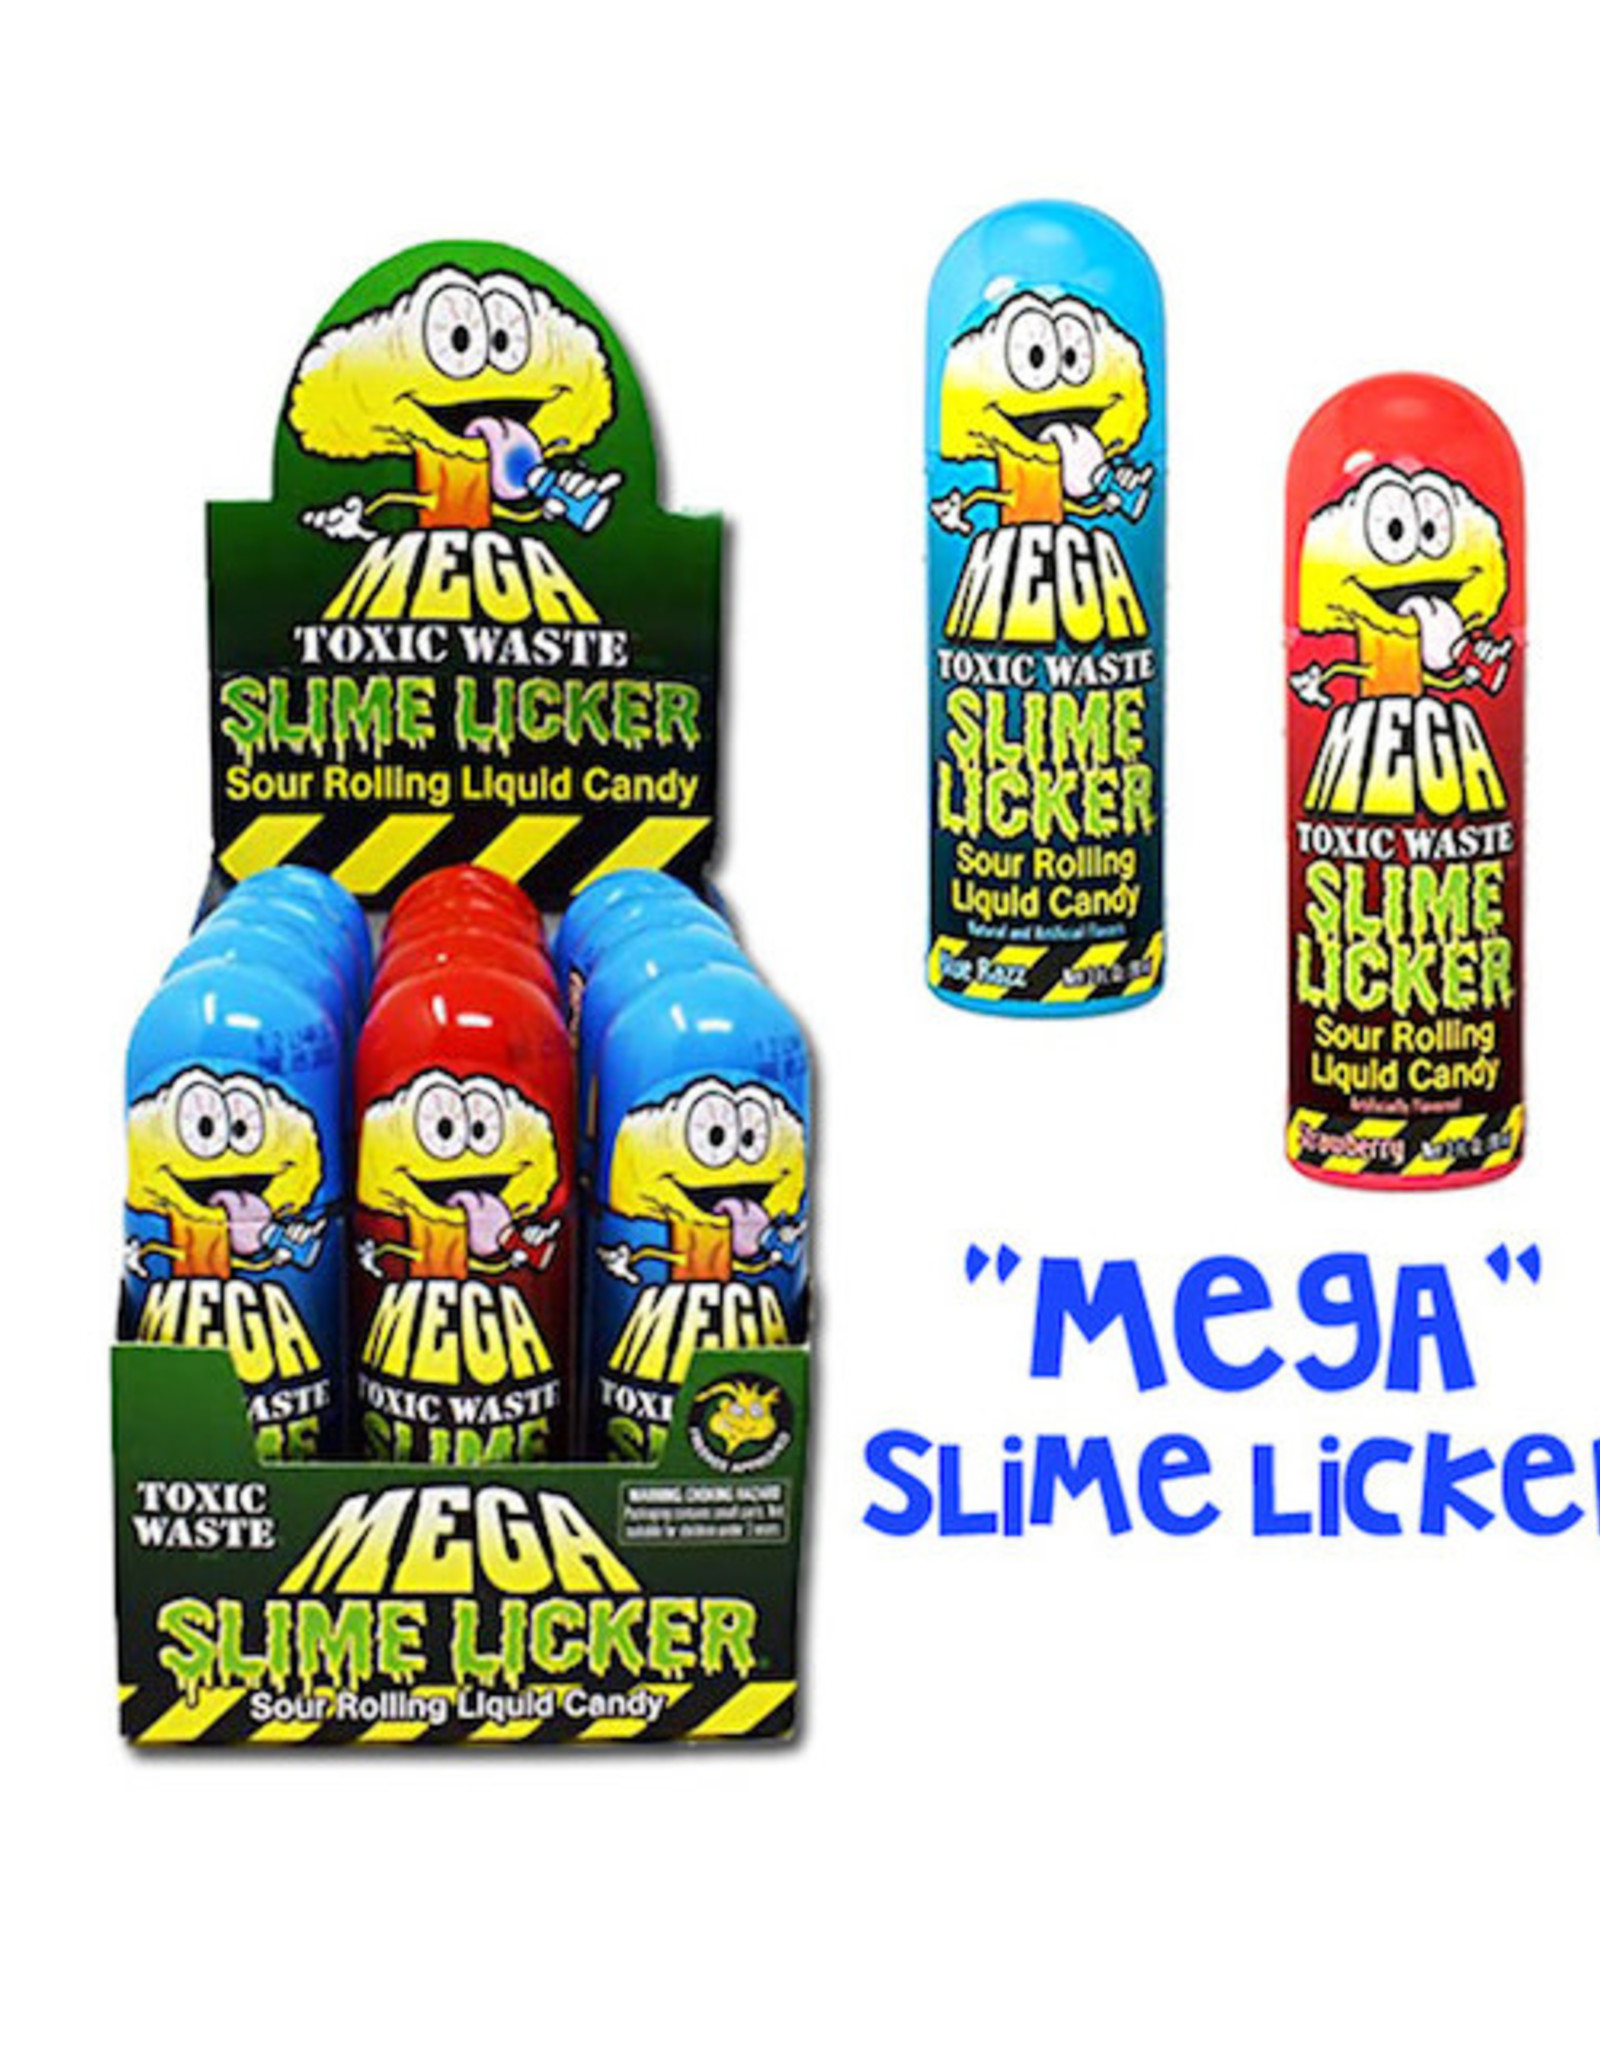 Mega Toxic Waste Slime Licker